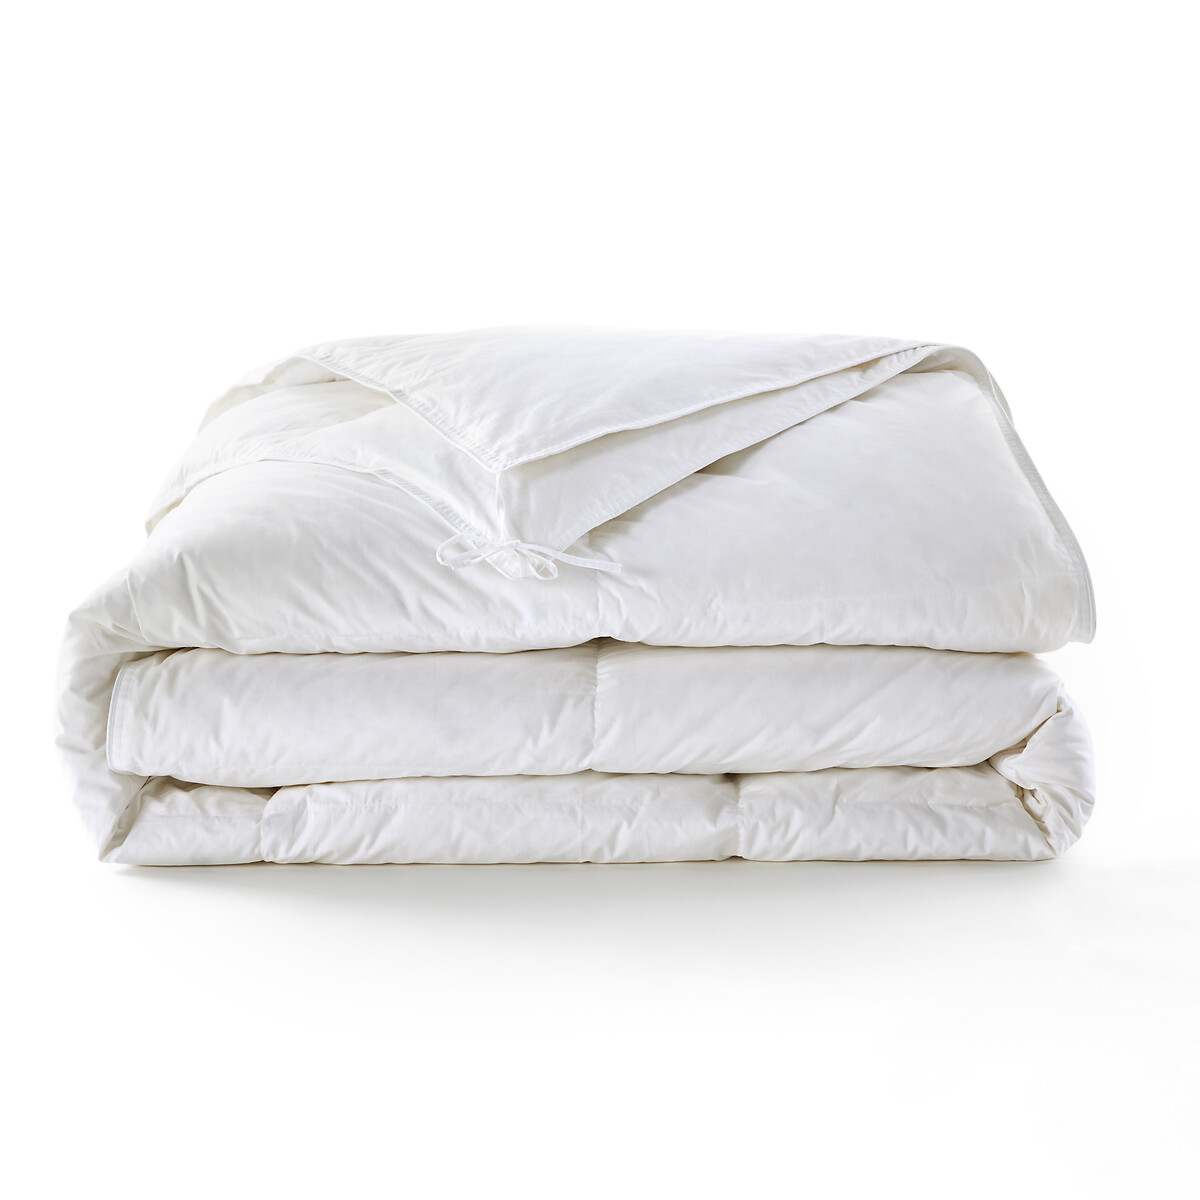 Одеяло LA REDOUTE INTERIEURS Одеяло 4 сезона натуральное 140 x 200 см белый, размер 140 x 200 см - фото 2